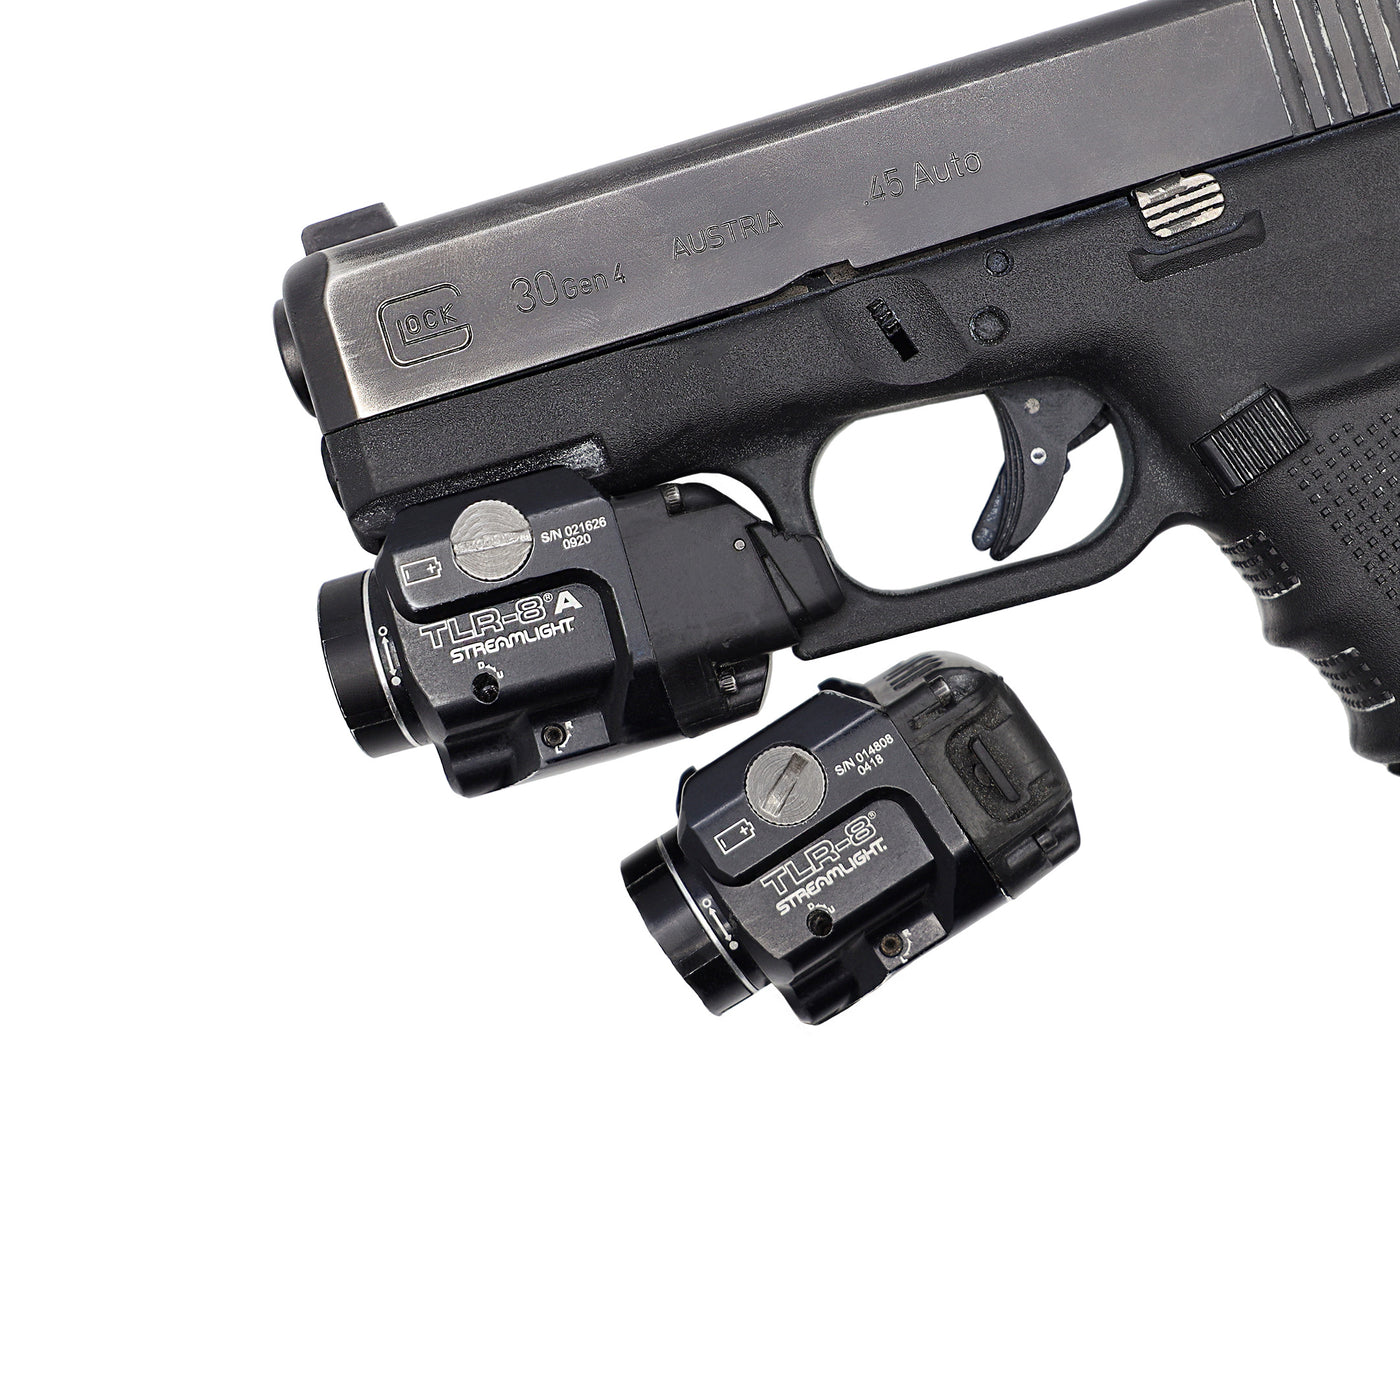 Glock 29/30 firearm with streamlight TLR8 weapon light